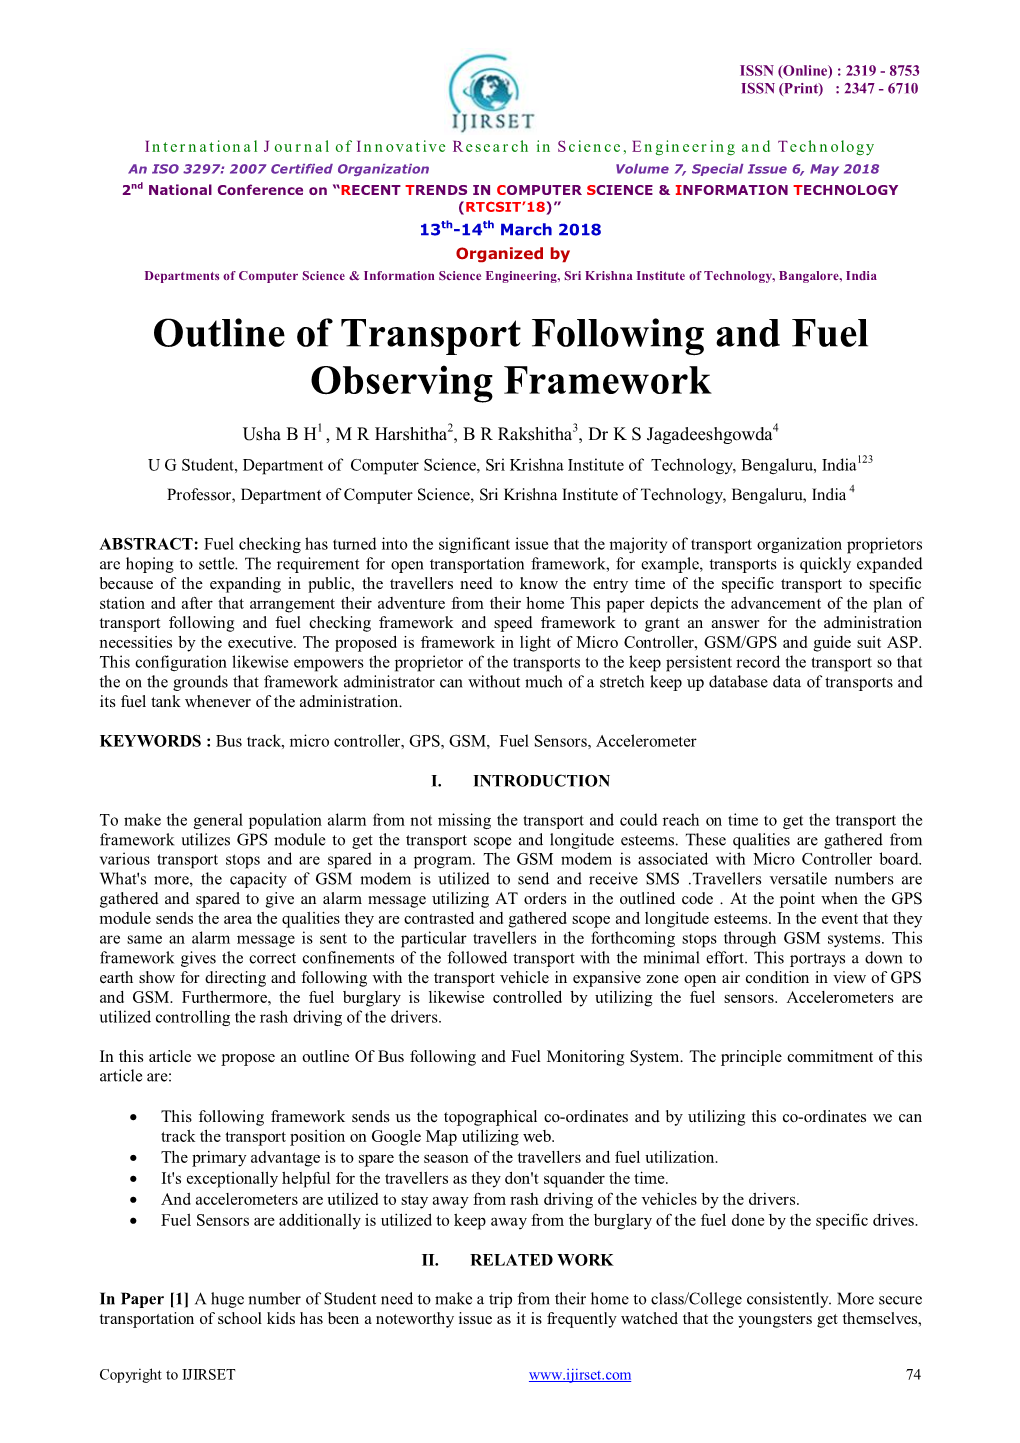 Outline of Transport Following and Fuel Observing Framework